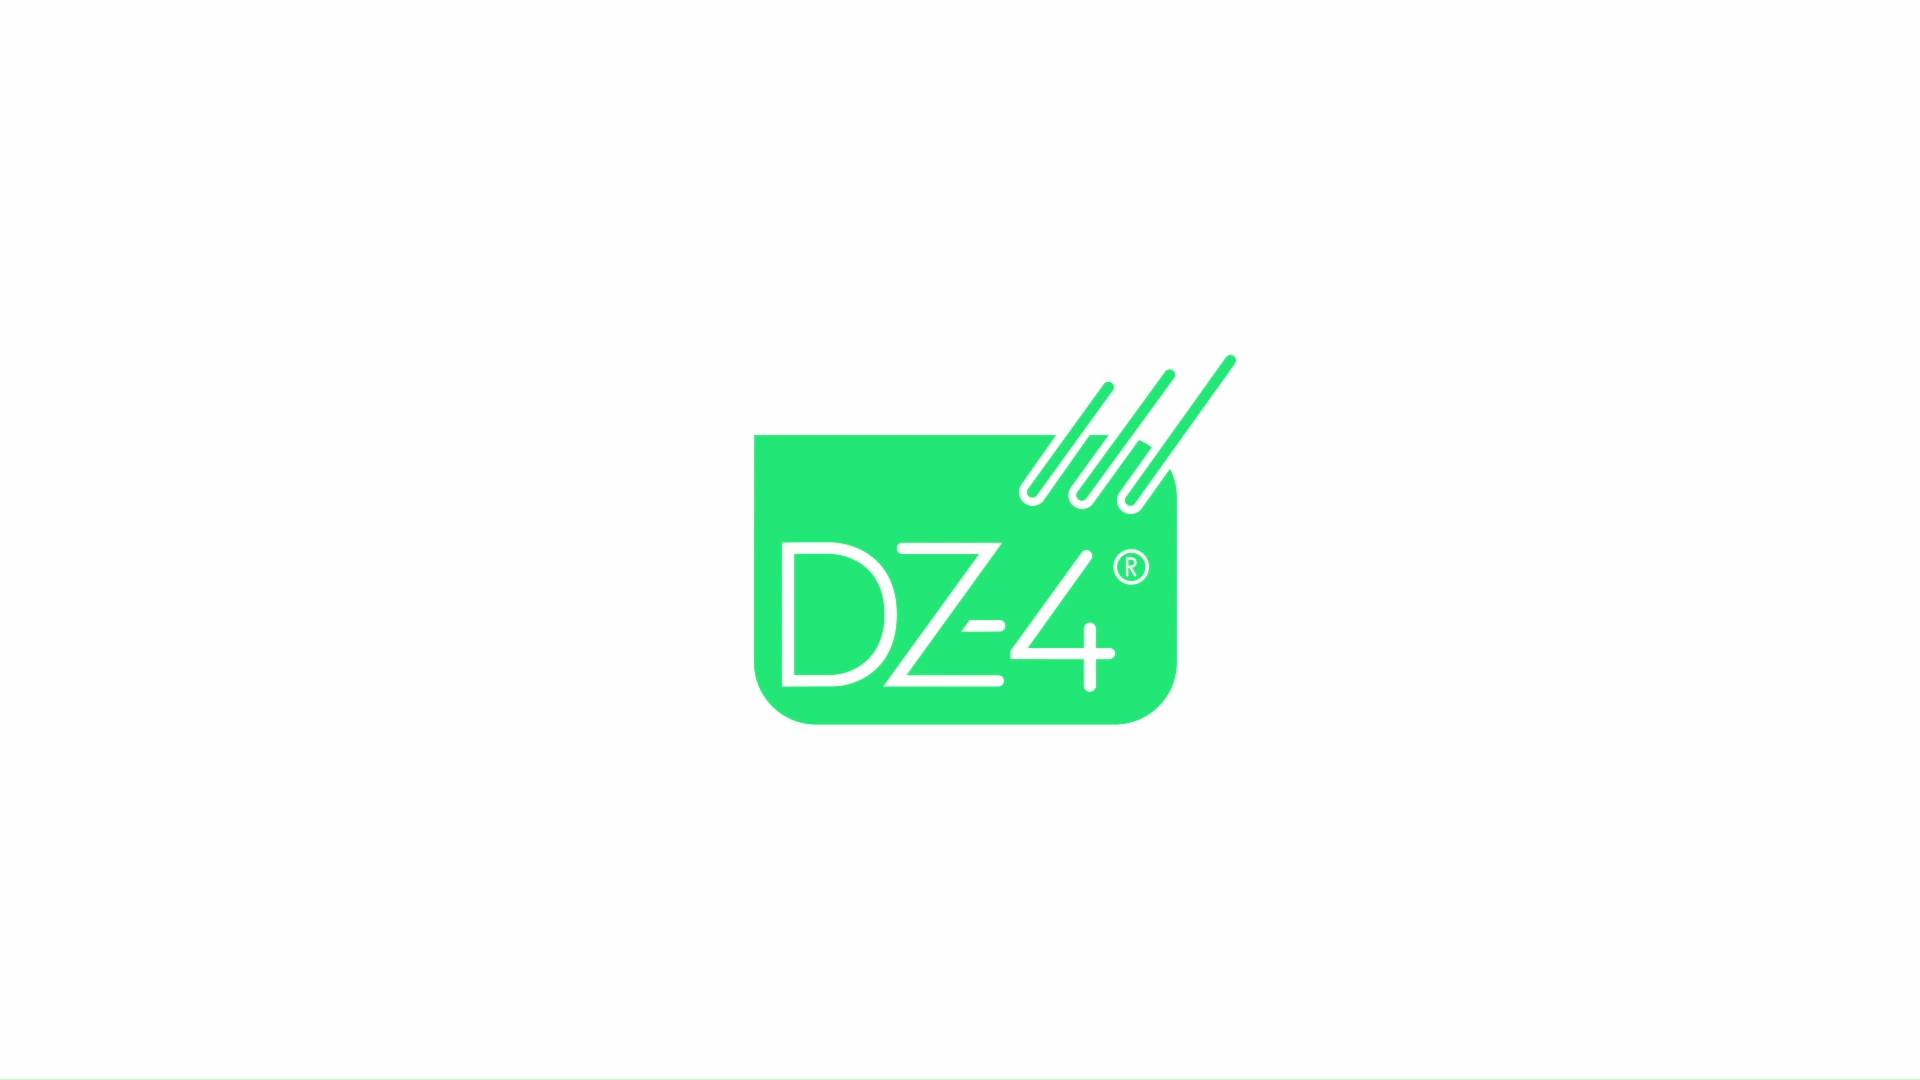 DZ-4 Employer Branding Video